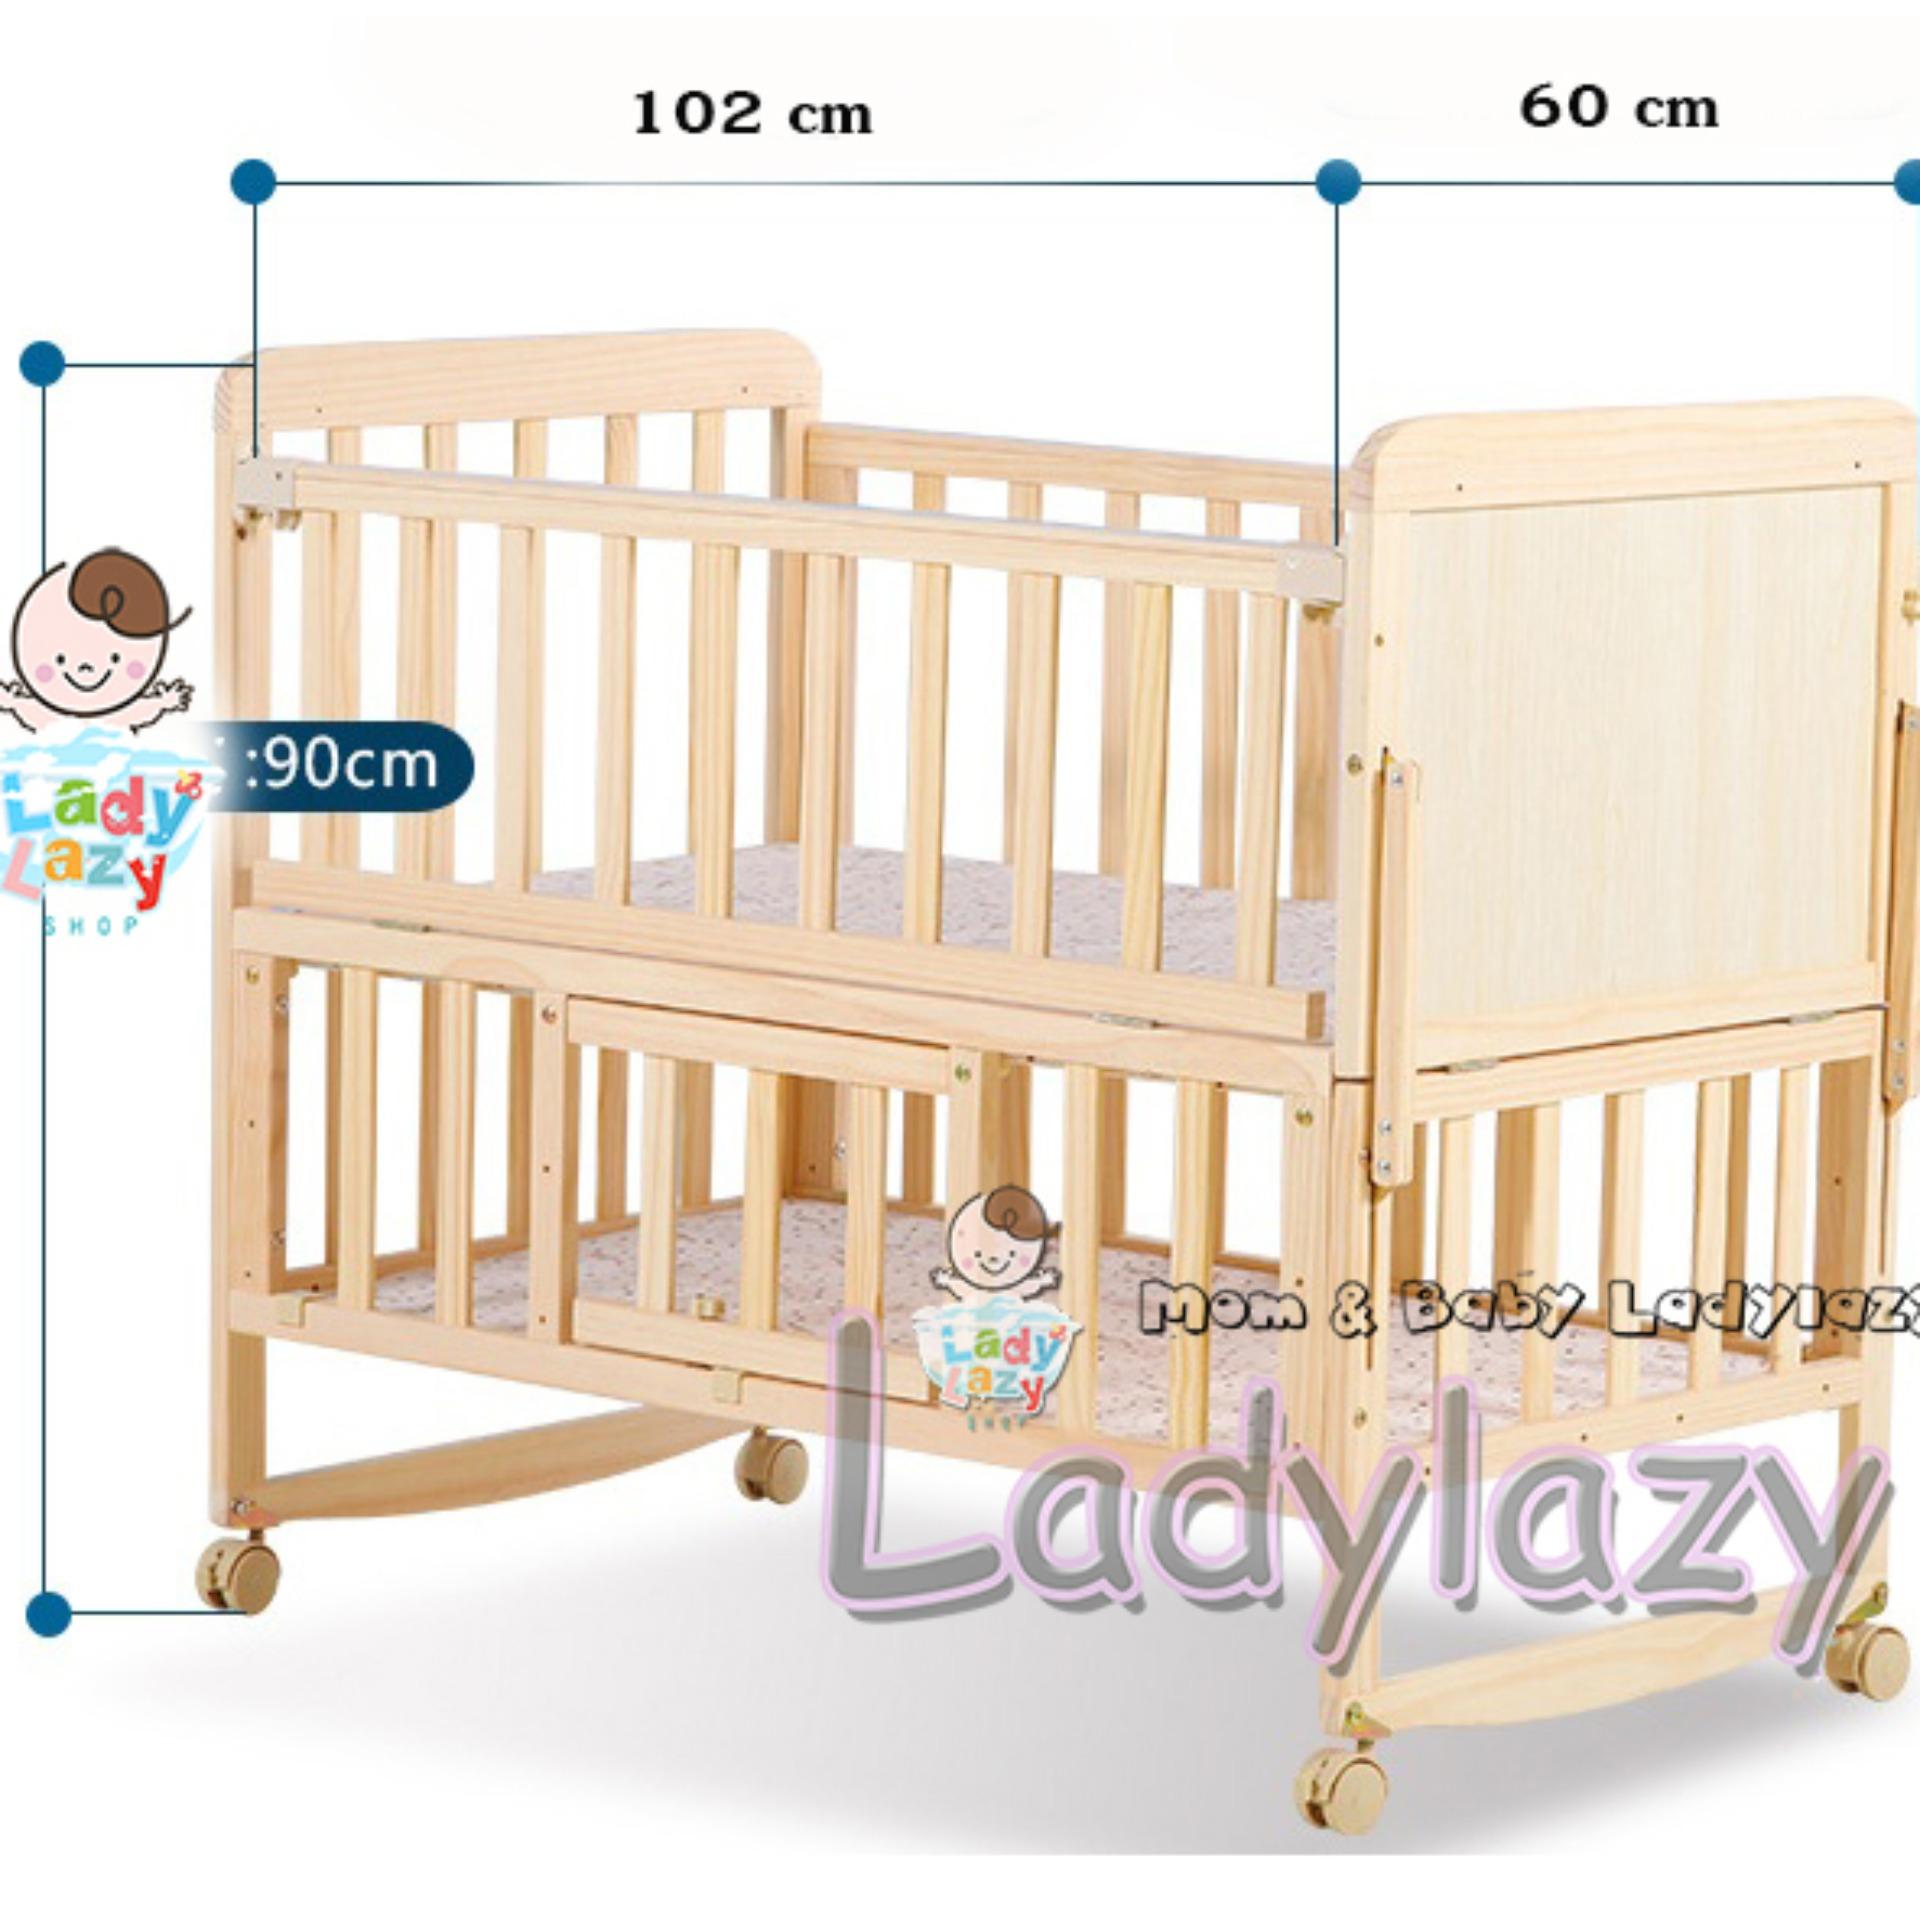 Ladylazyเตียงเด็ก เตียงนอนไม้เด็ก เข็นได้/โยกได้ พื้นเตียงปรับระดับได้ ทำจากไม้สนแท้ 100% 